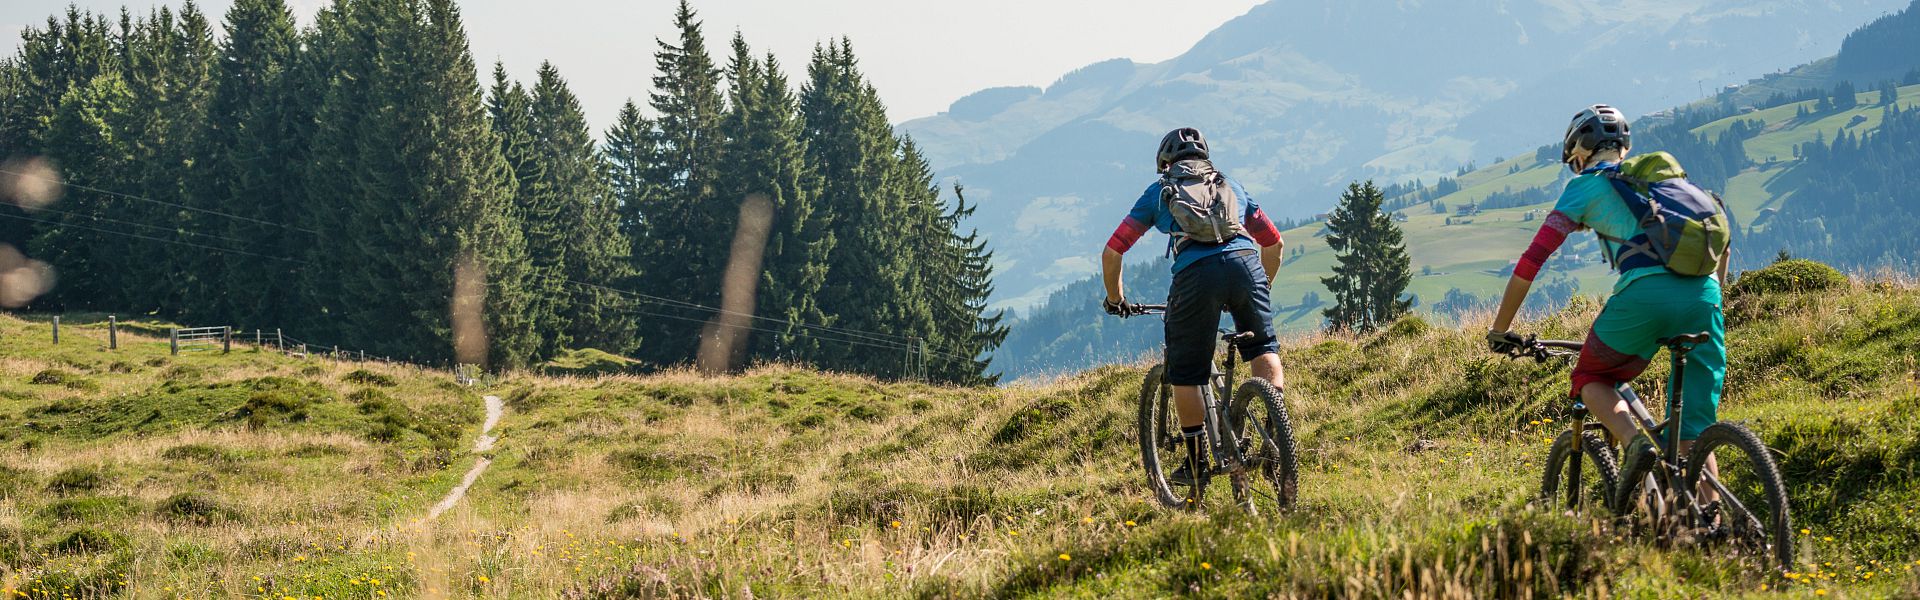 Kitzbüheler Alpen-Mountainbiker-am-Trail-c-Kurt Tropper  (8)